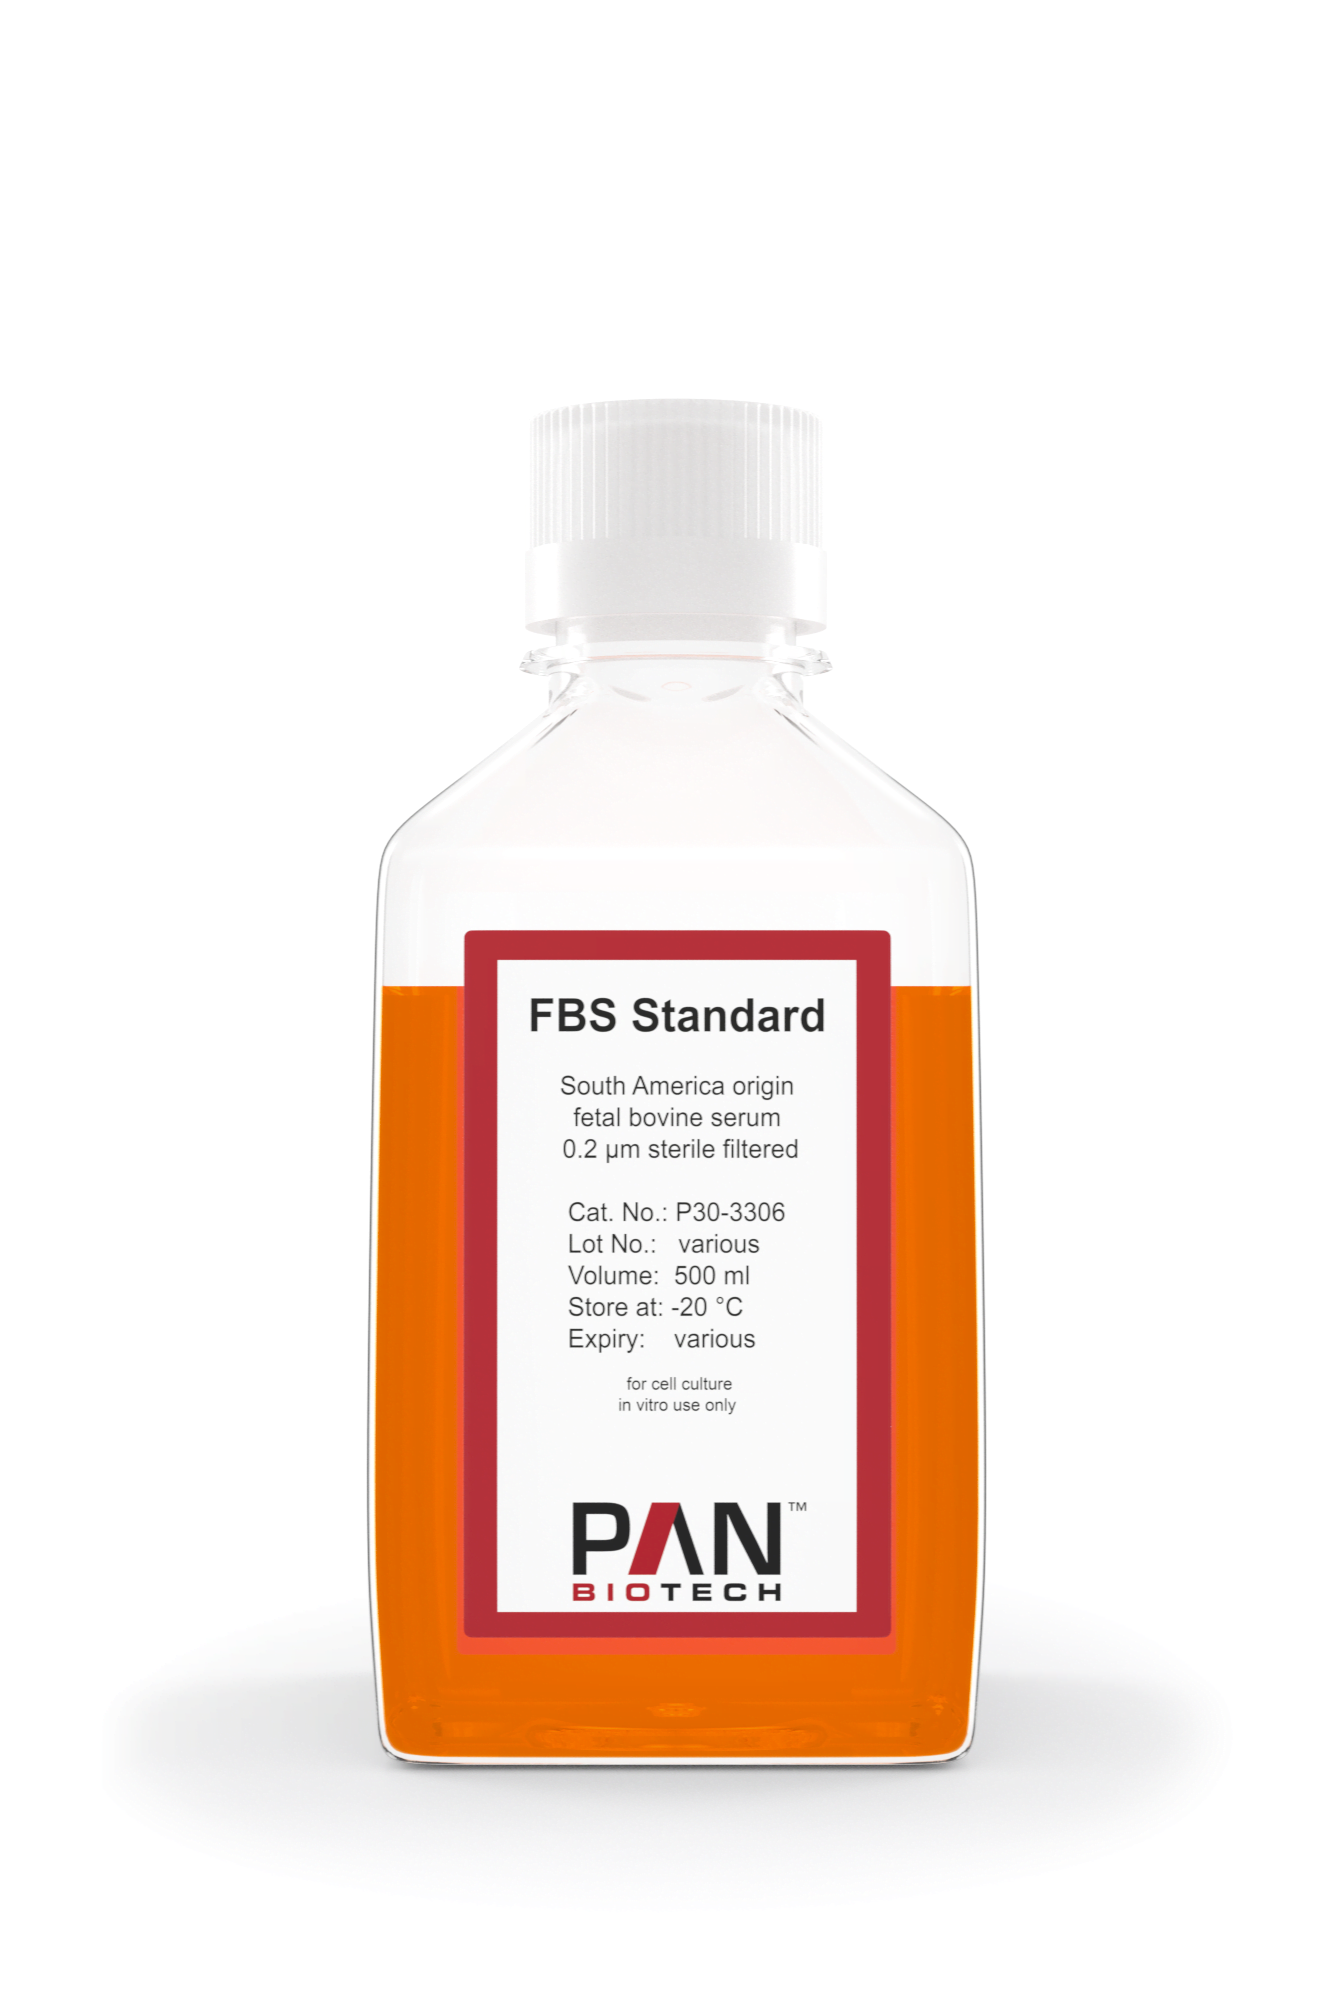 FBS Standard South America origin fetal bovine serum